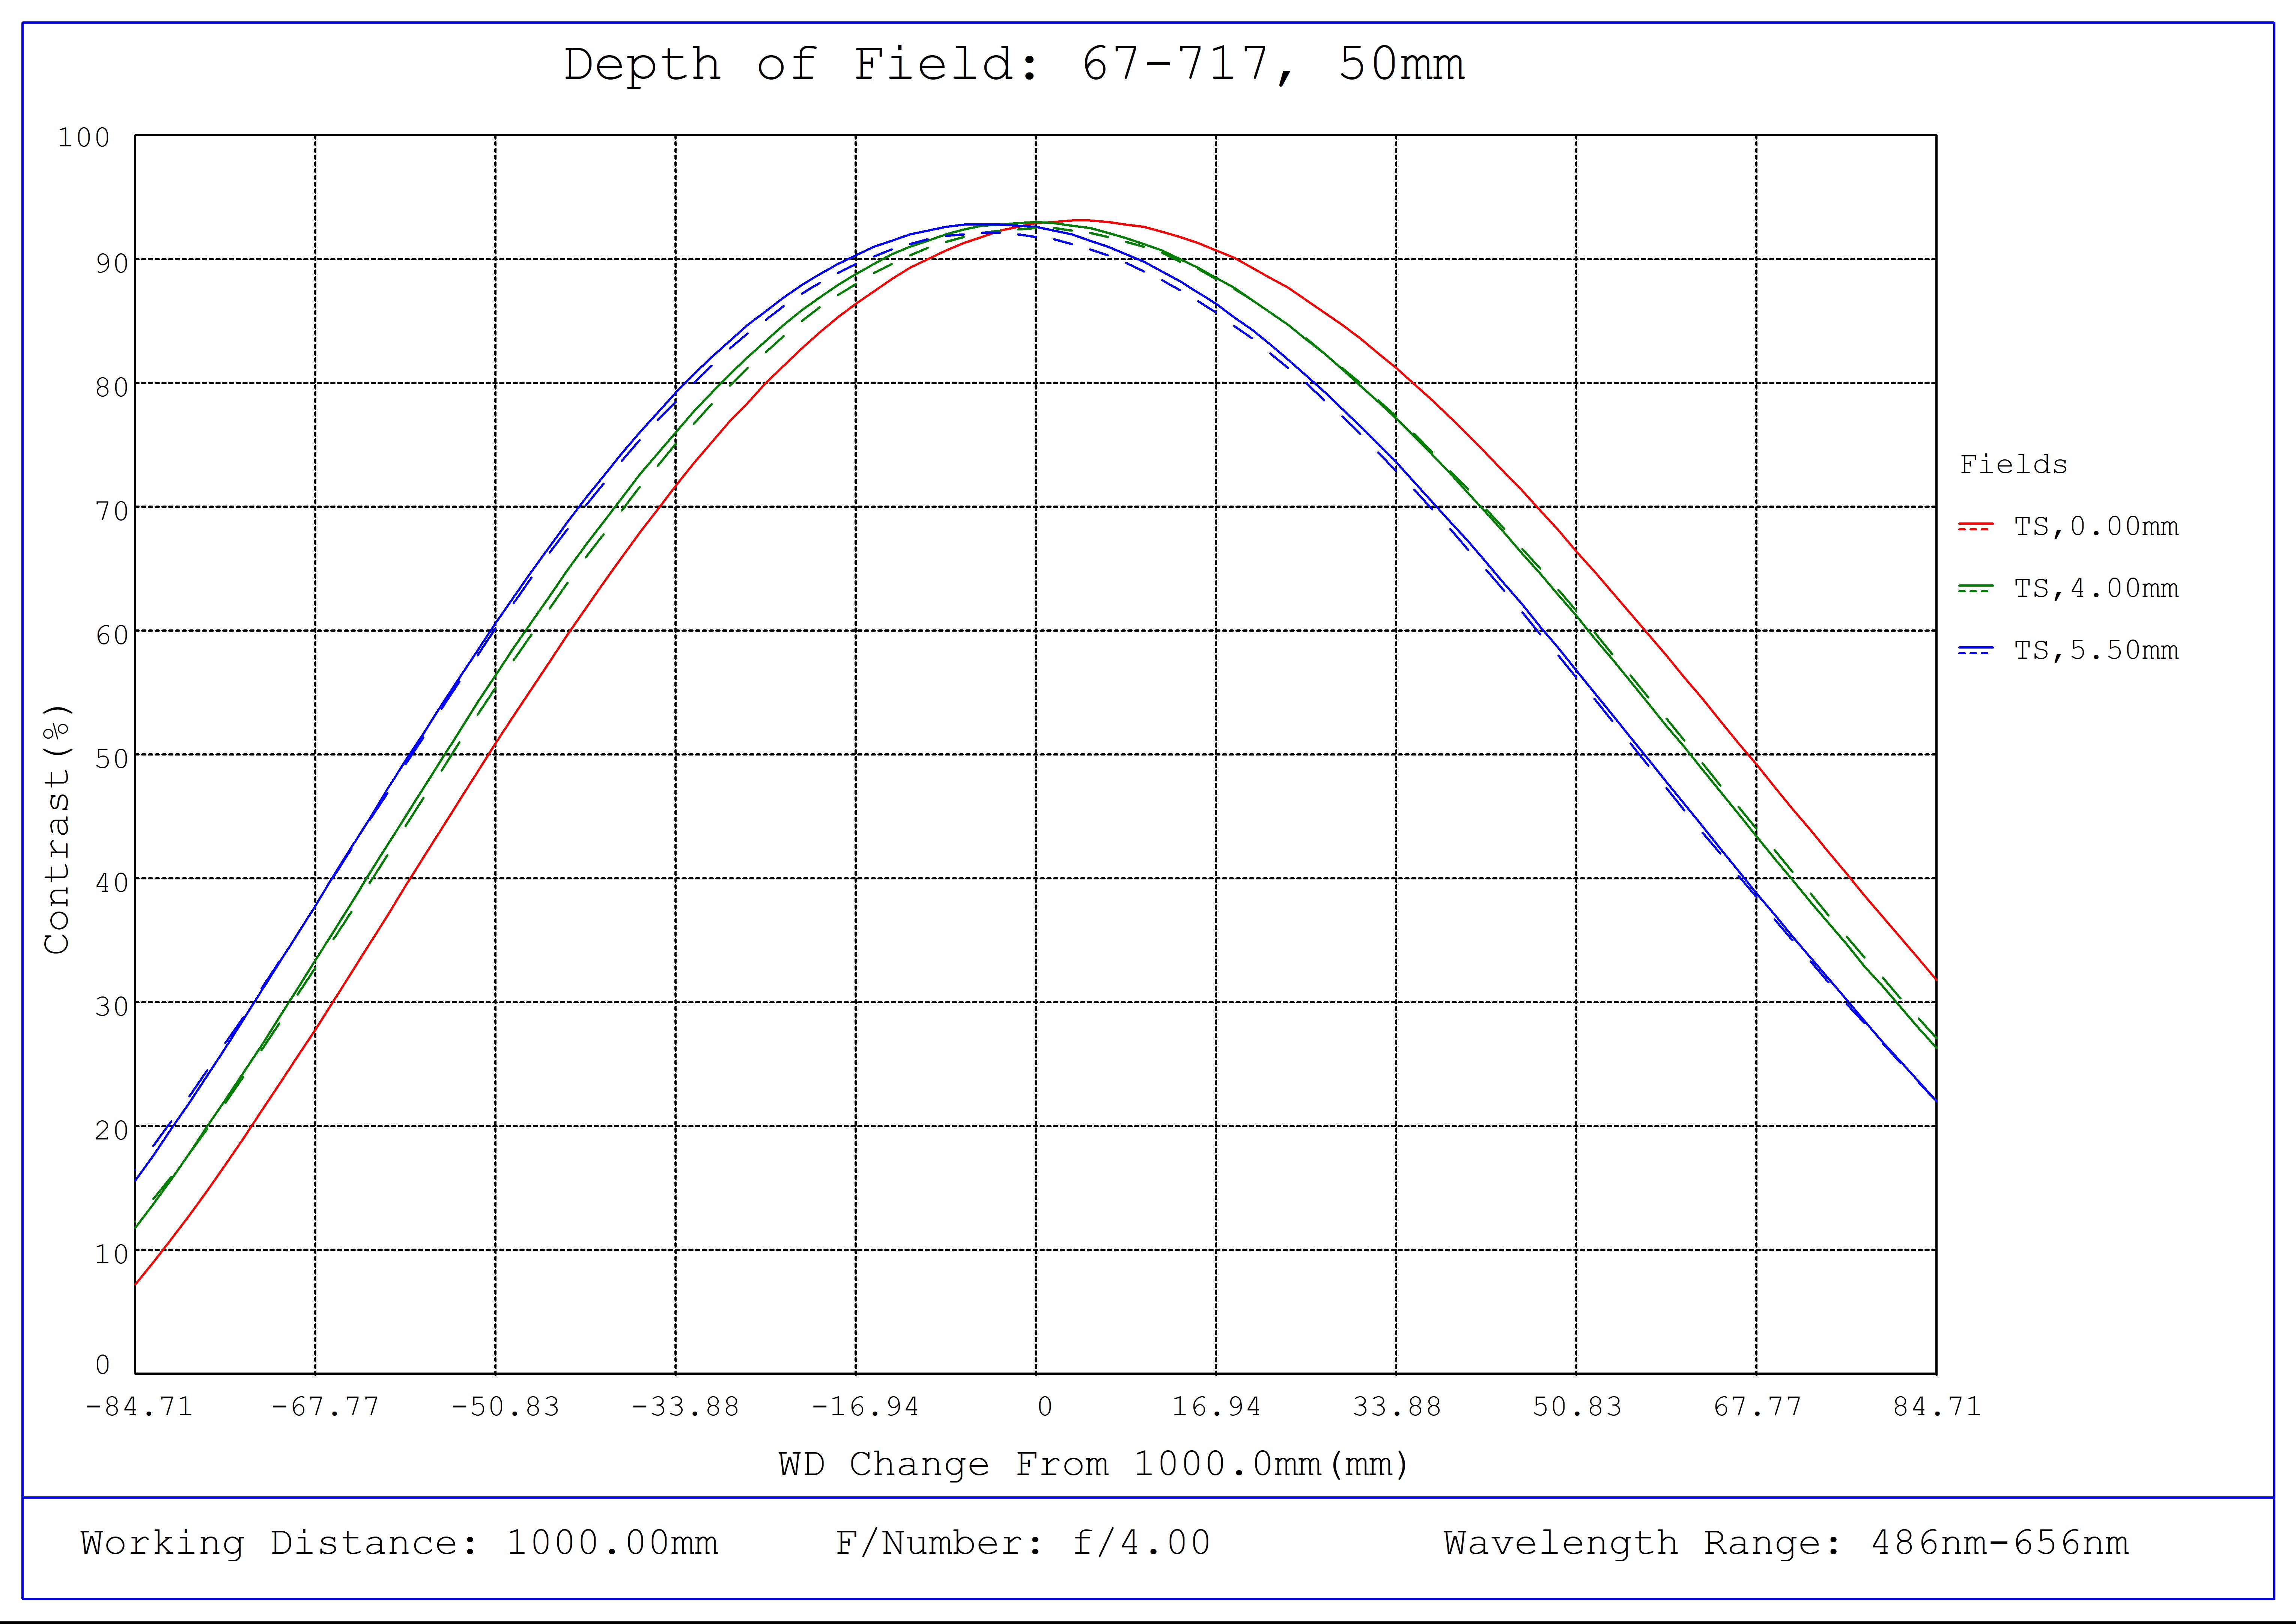 #67-717, 50mm C VIS-NIR Series Fixed Focal Length Lens, Depth of Field Plot, 1000mm Working Distance, f4